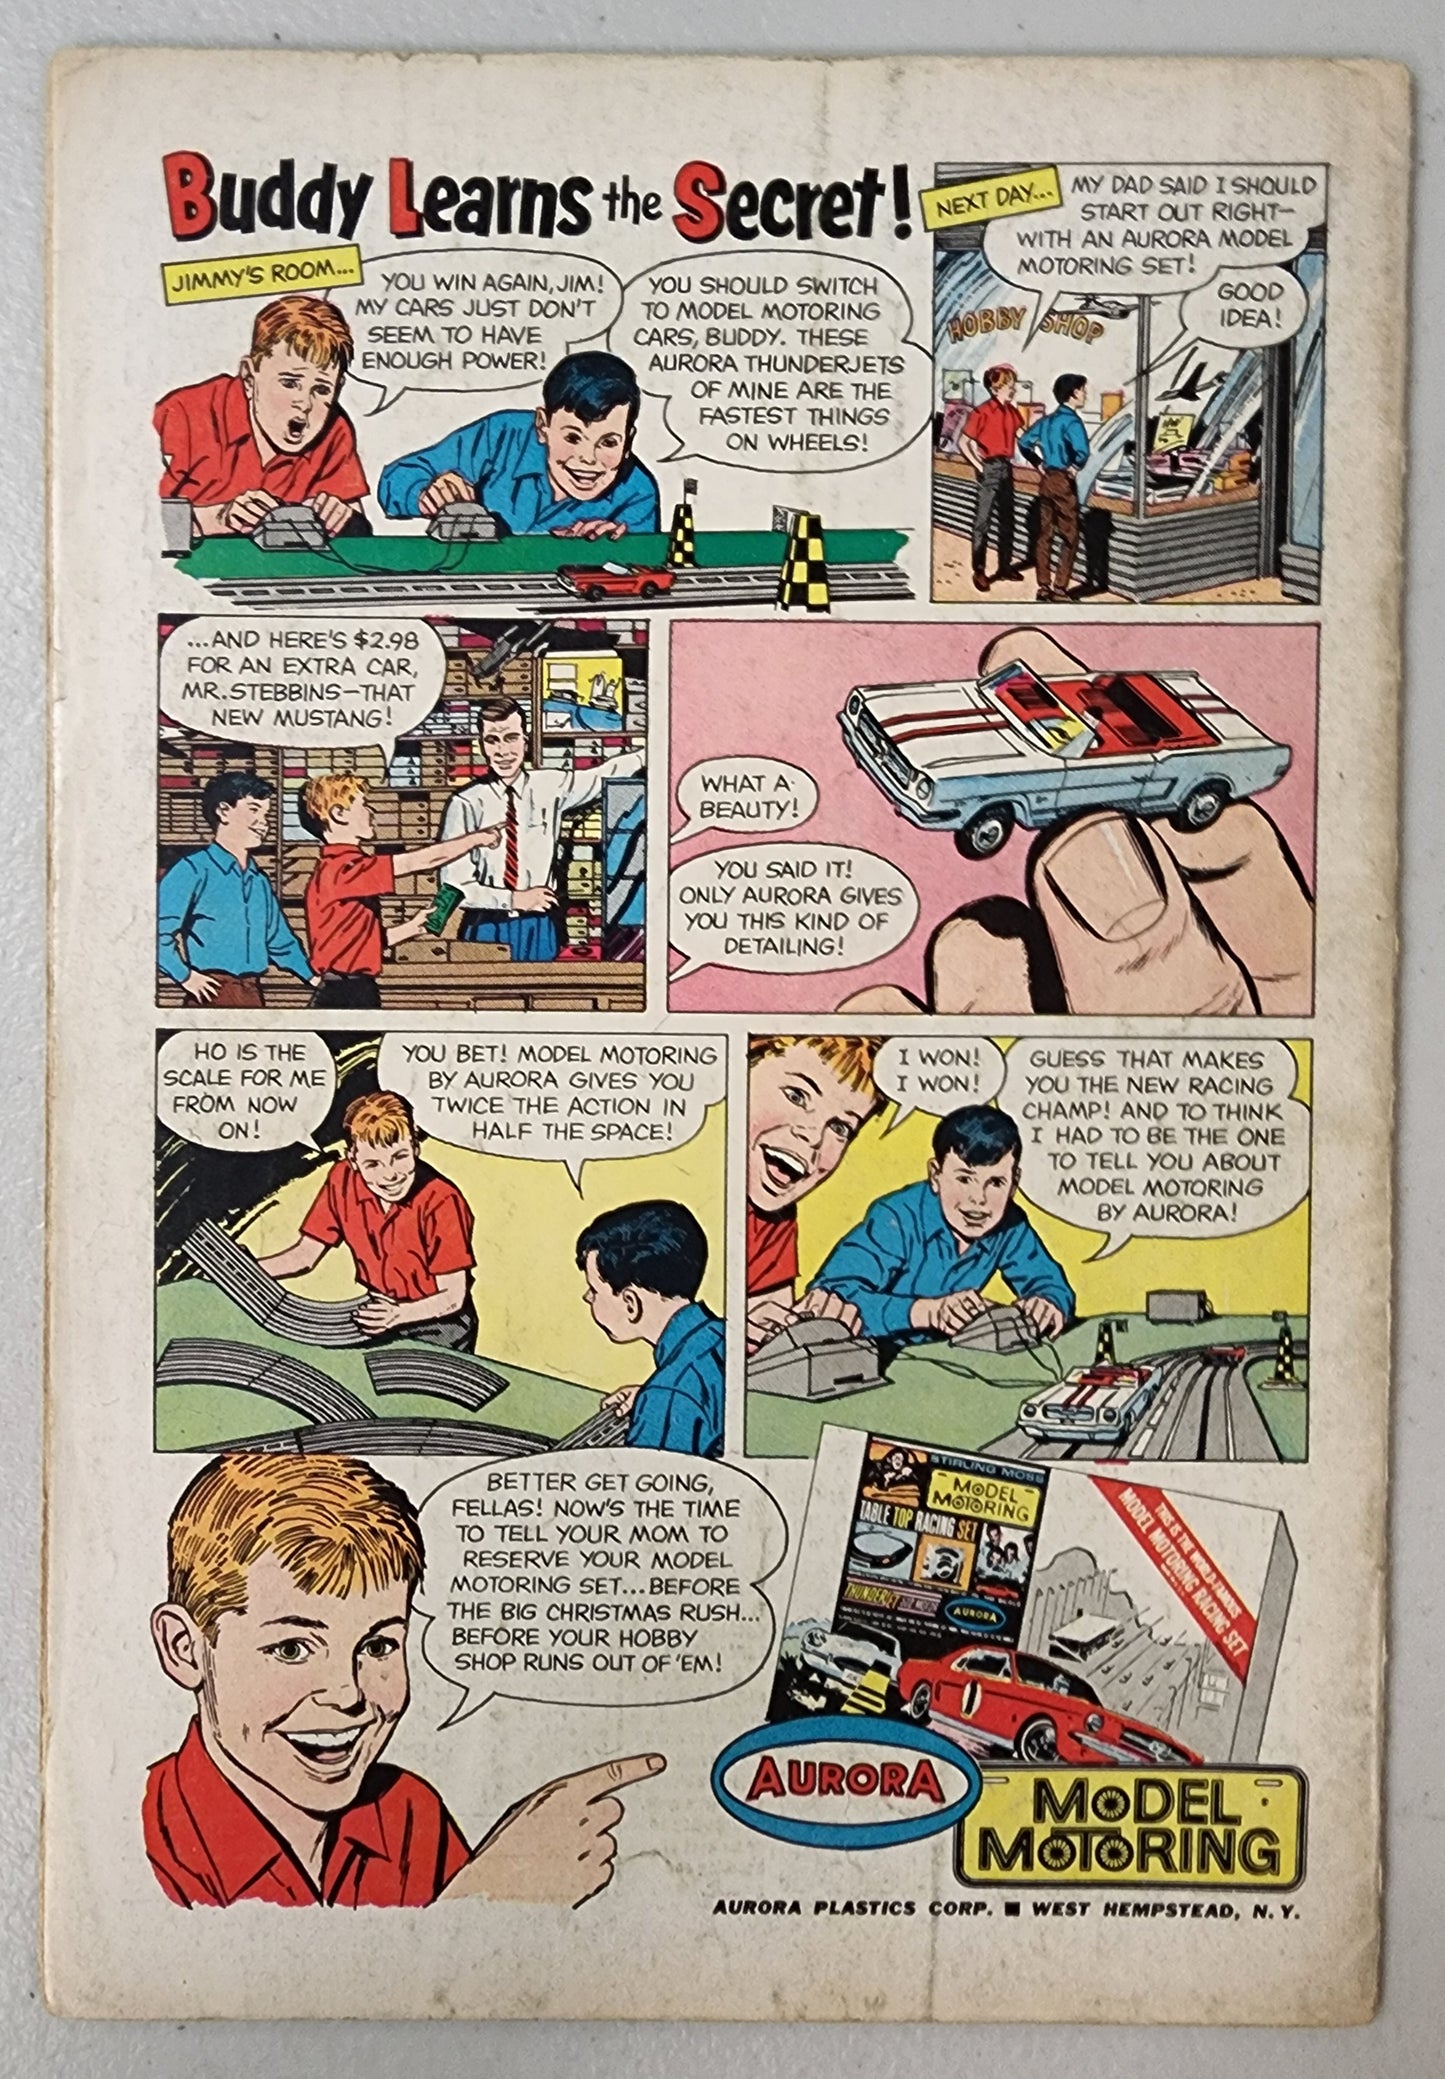 SUPERMAN #174 1965